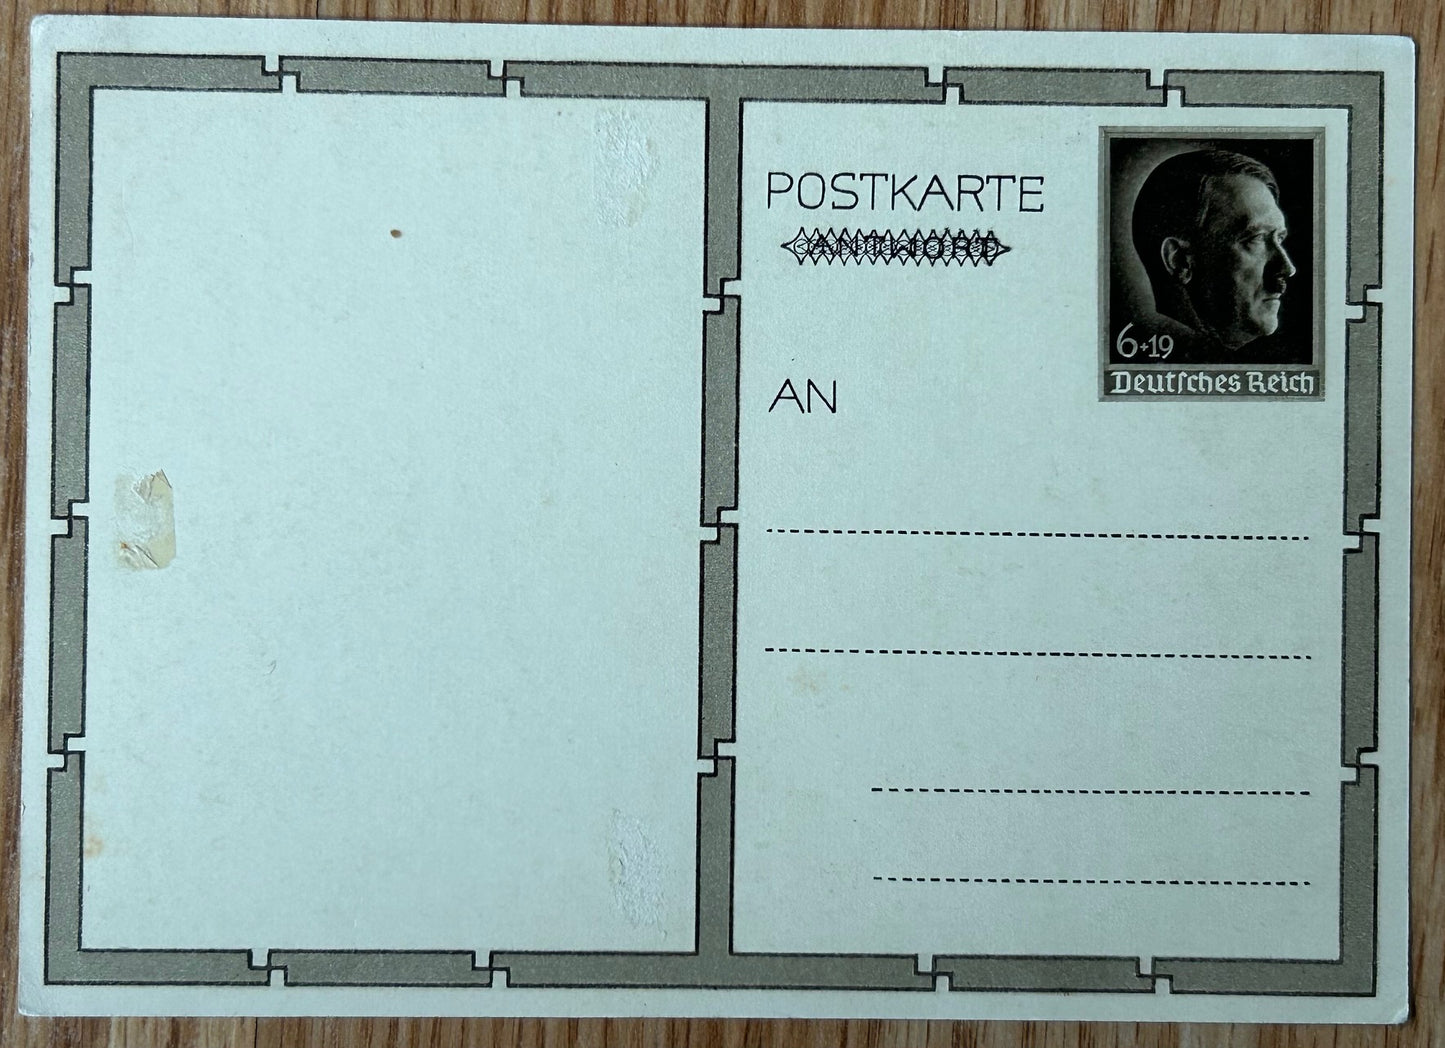 Hitler portrait postcard 1939